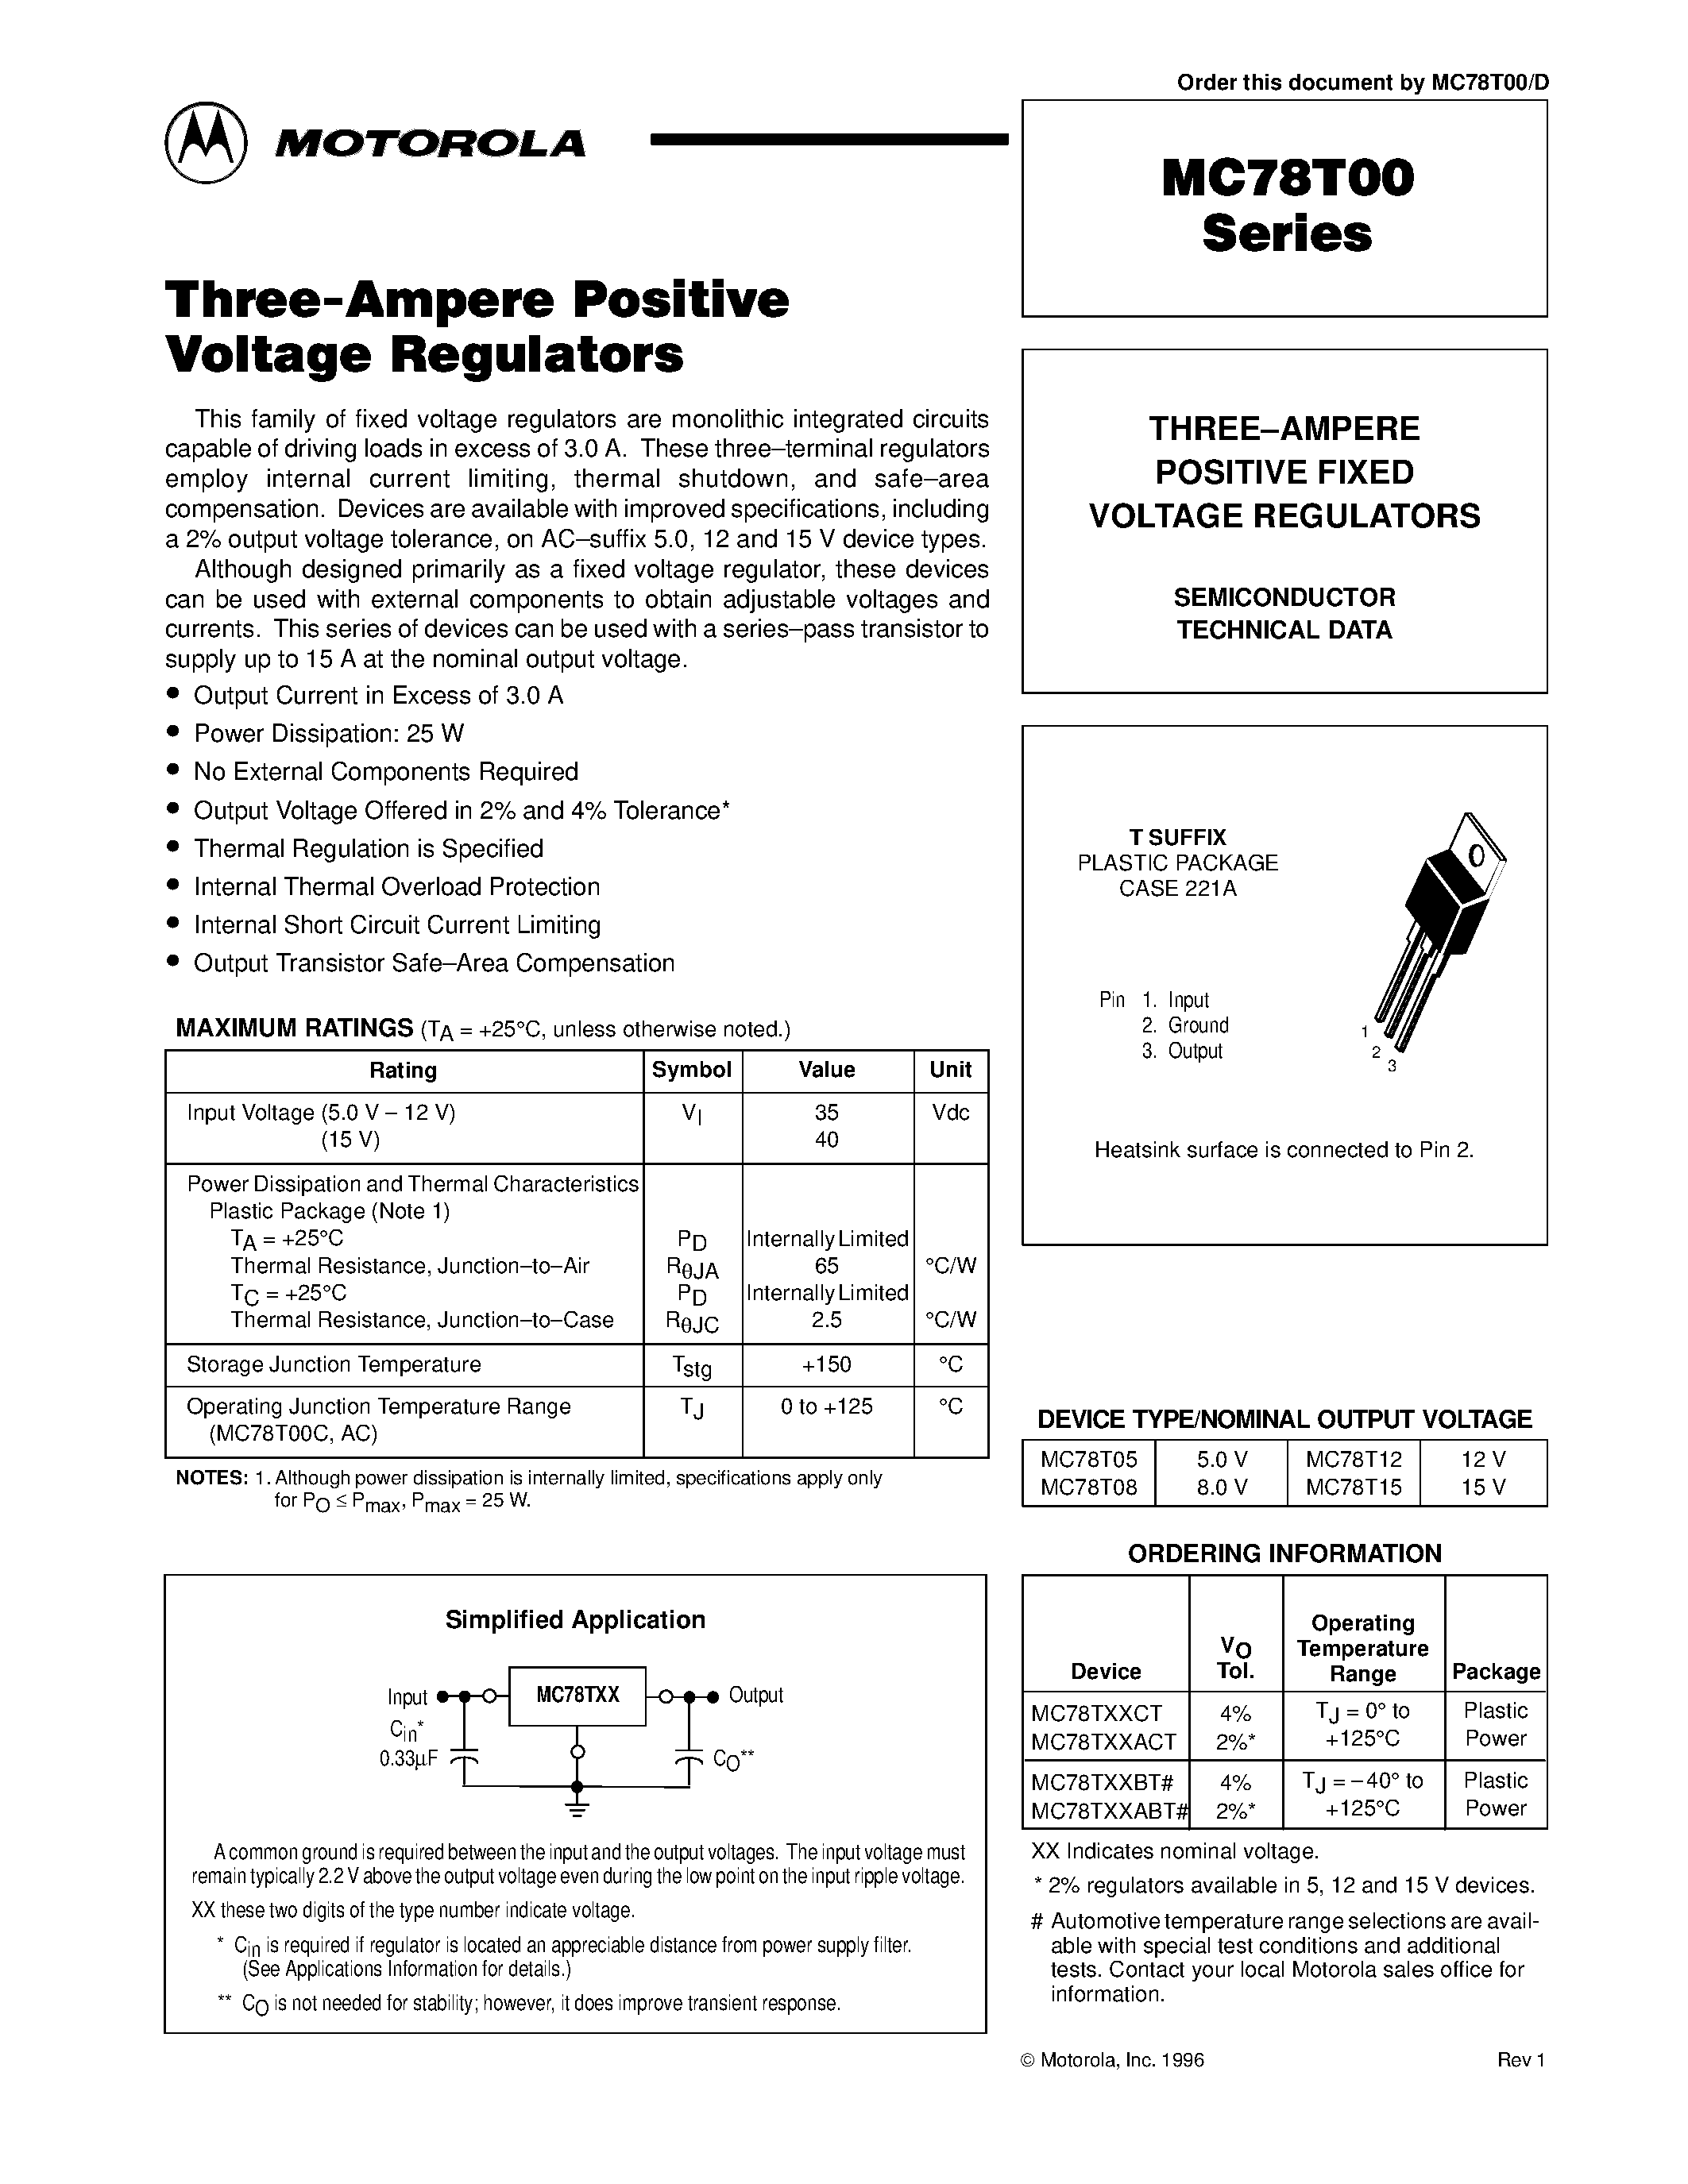 Datasheet MC78T15AC - THREE-AMPERE POSITIVE FIXED VOLTAGE REGULATORS page 1